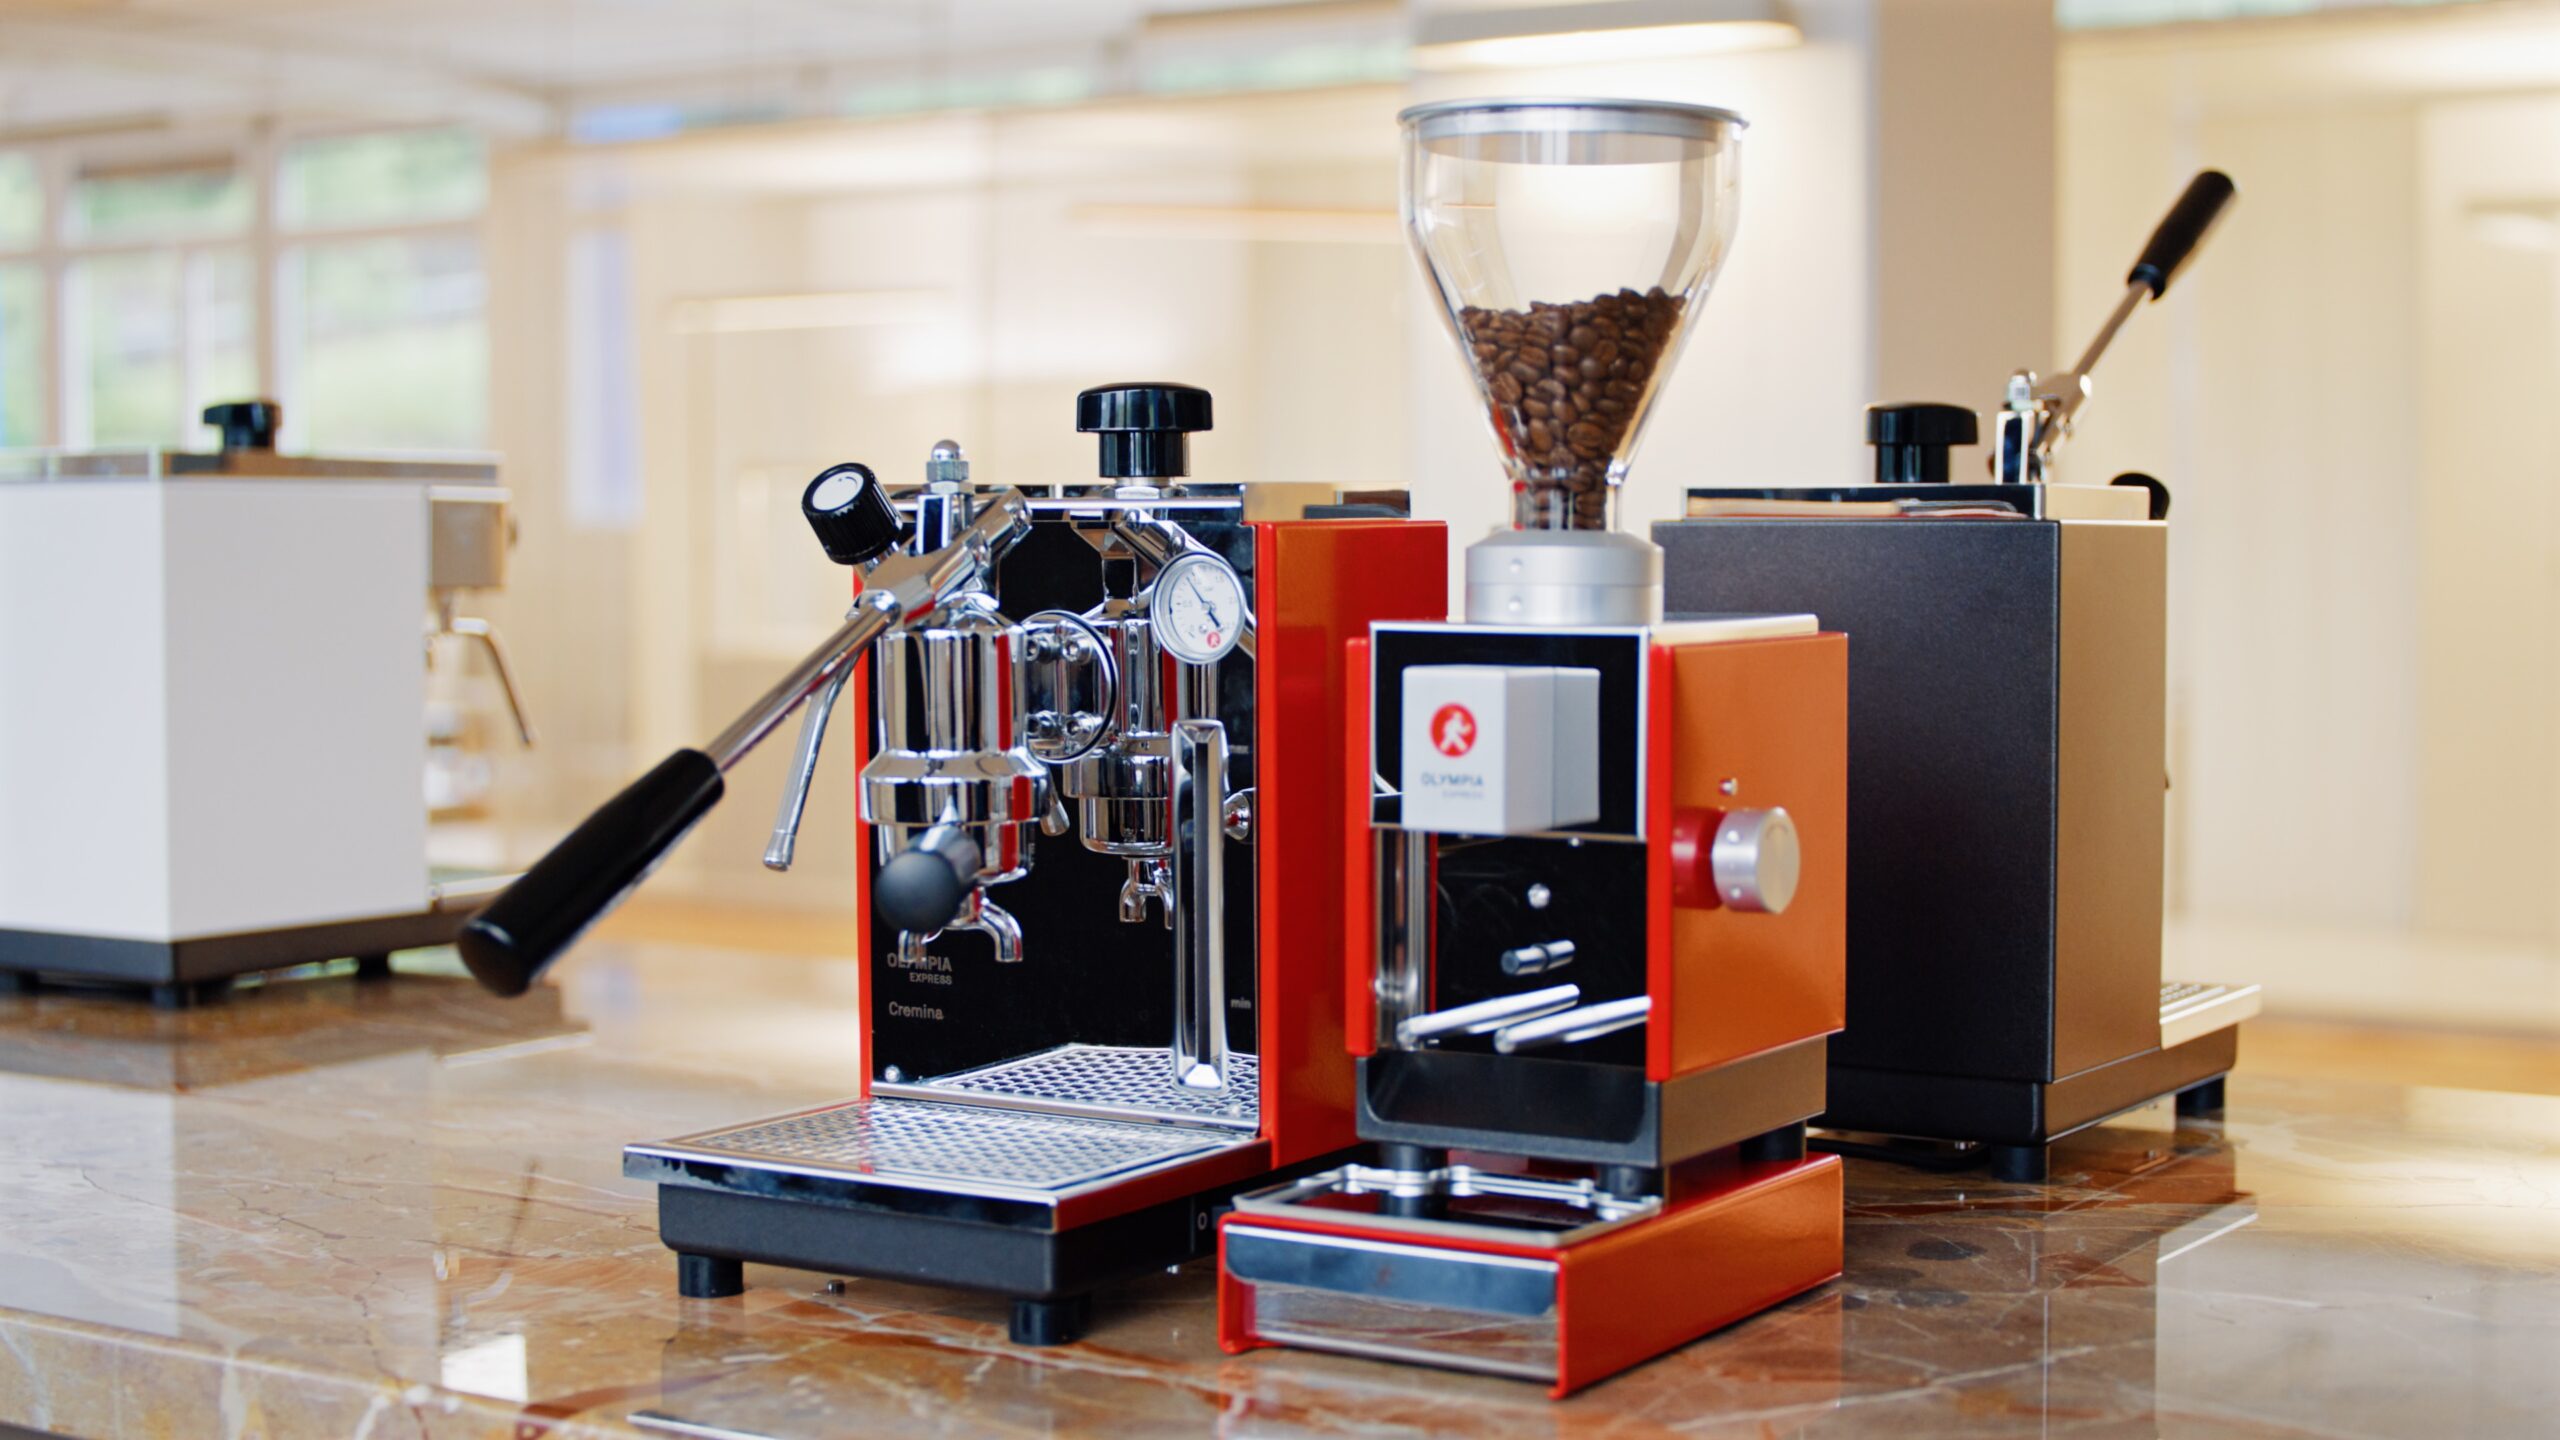 Olympia Express uses Siemens Xcelerator to modernize design and production of world’s best espresso machines - machineinsider.com